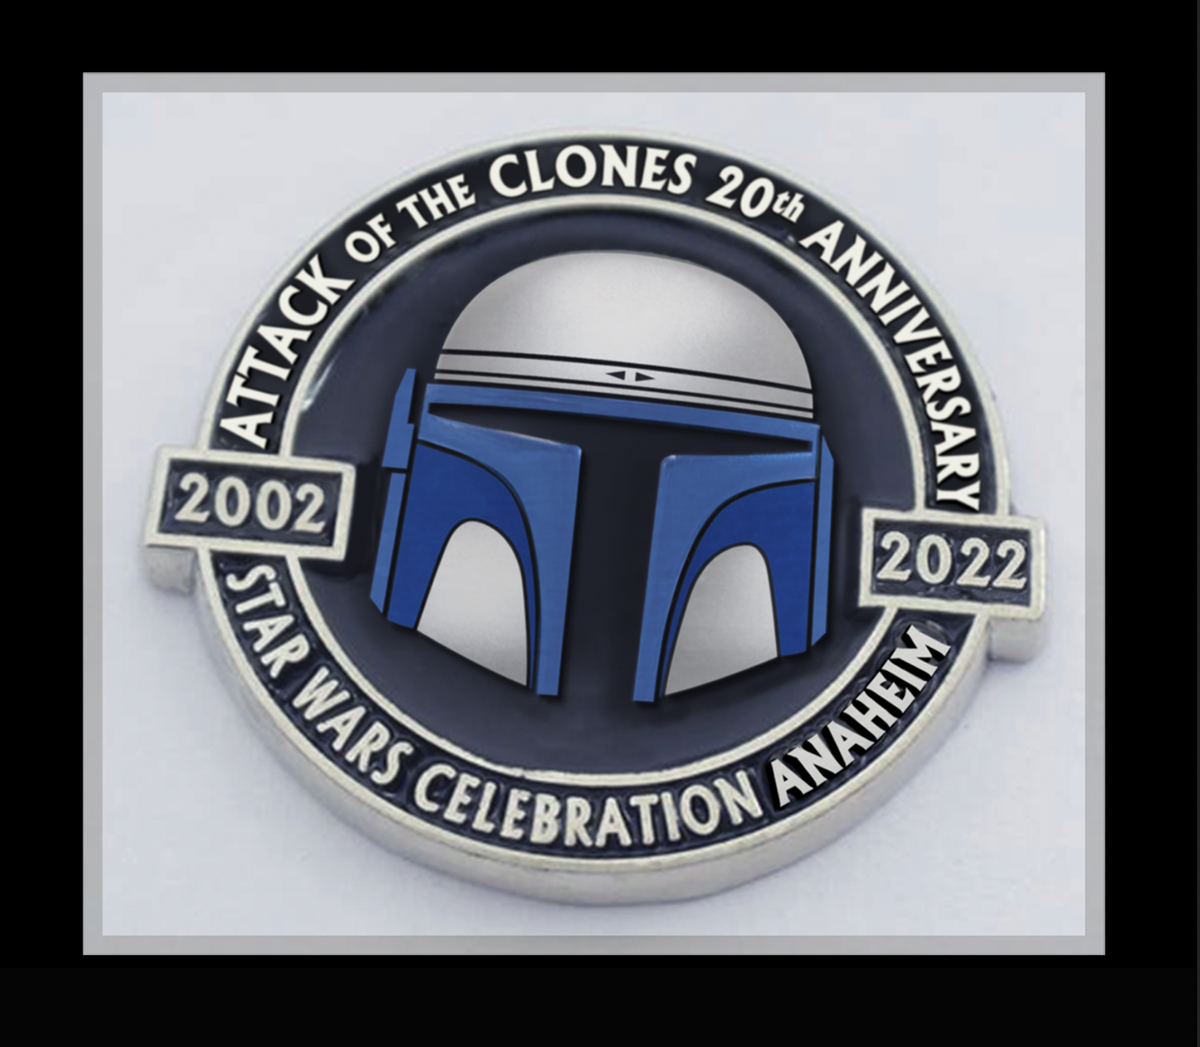 attack of the clones logo